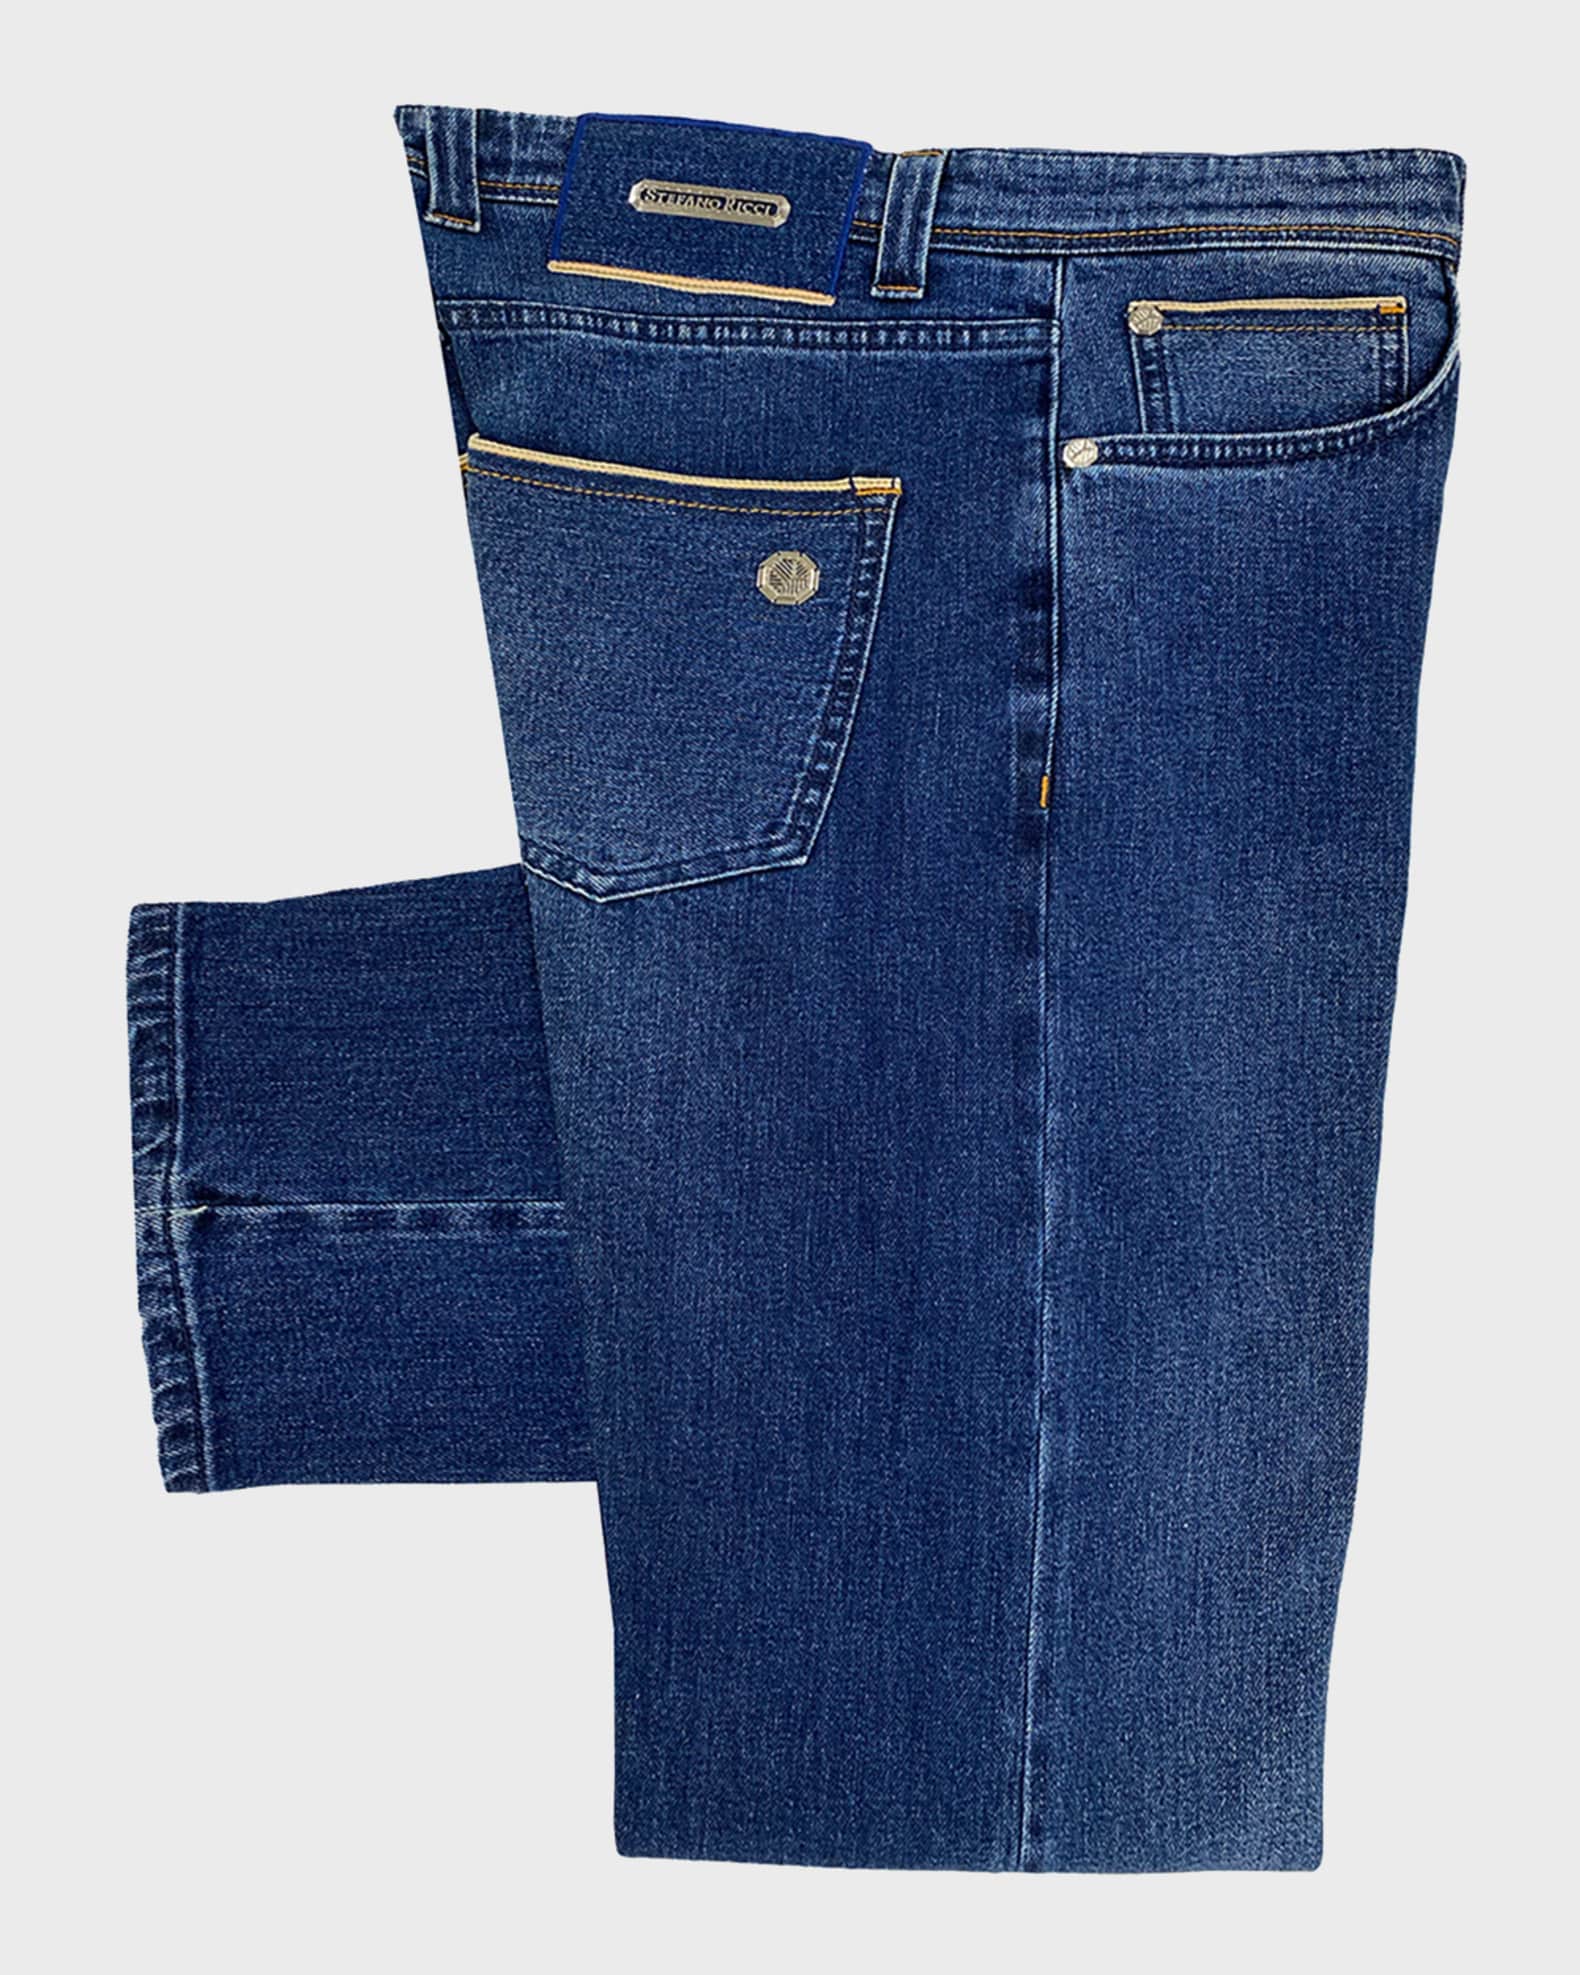 Stefano Ricci Men's Medium-Wash Jeans w/ Contrast Trim